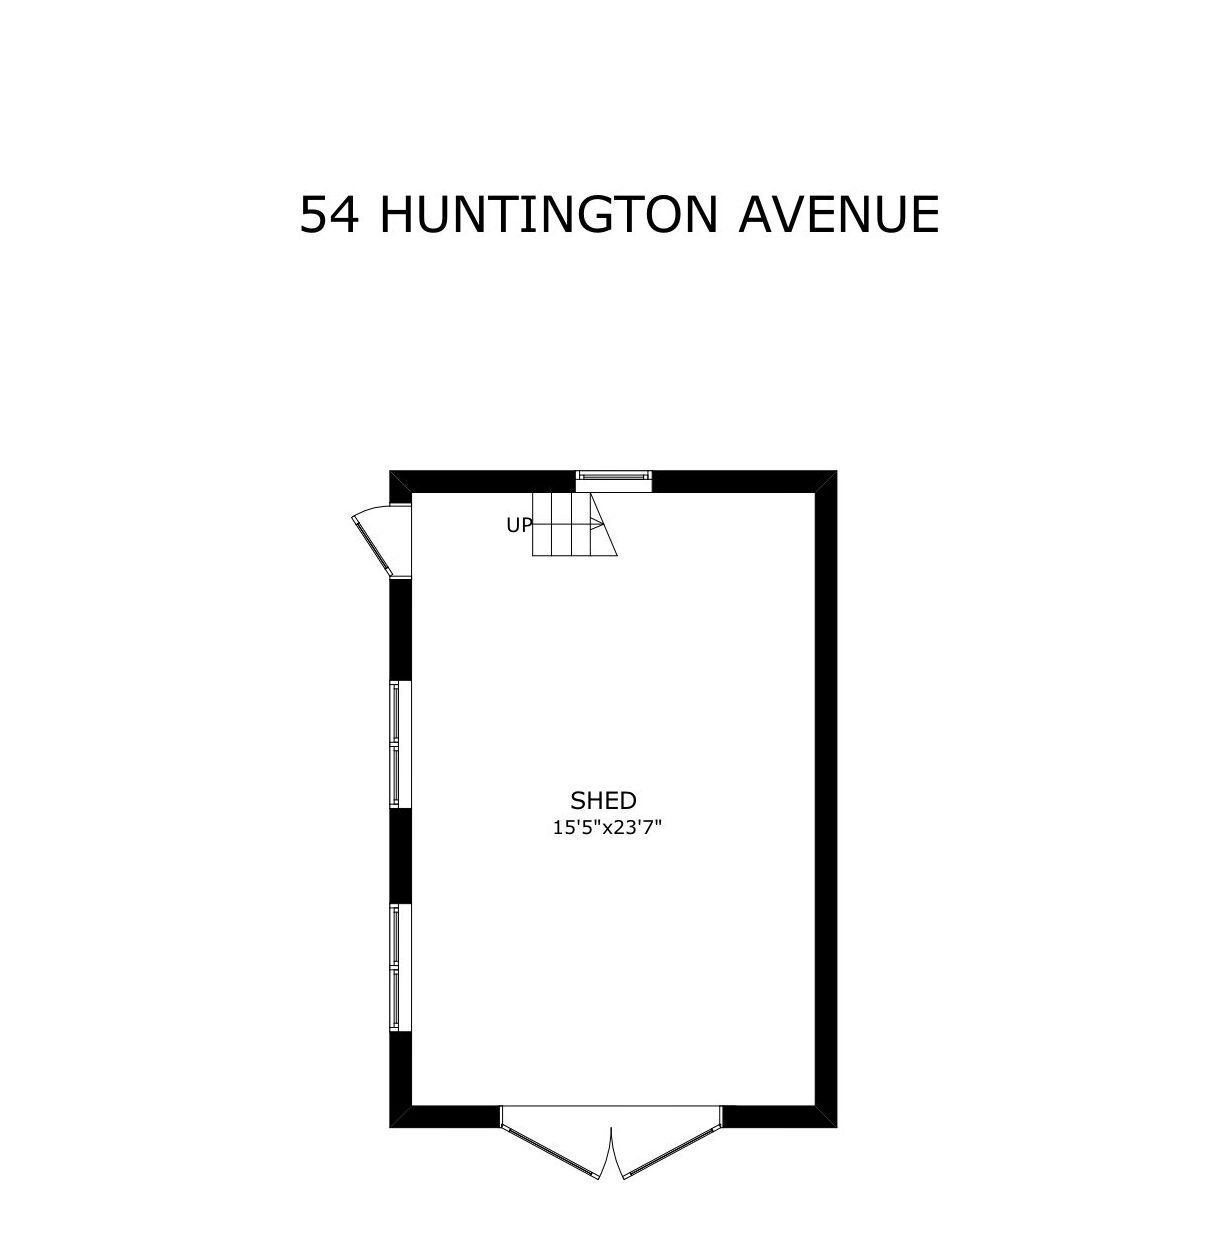 Floor plans for 54 Huntington Avenue shed.